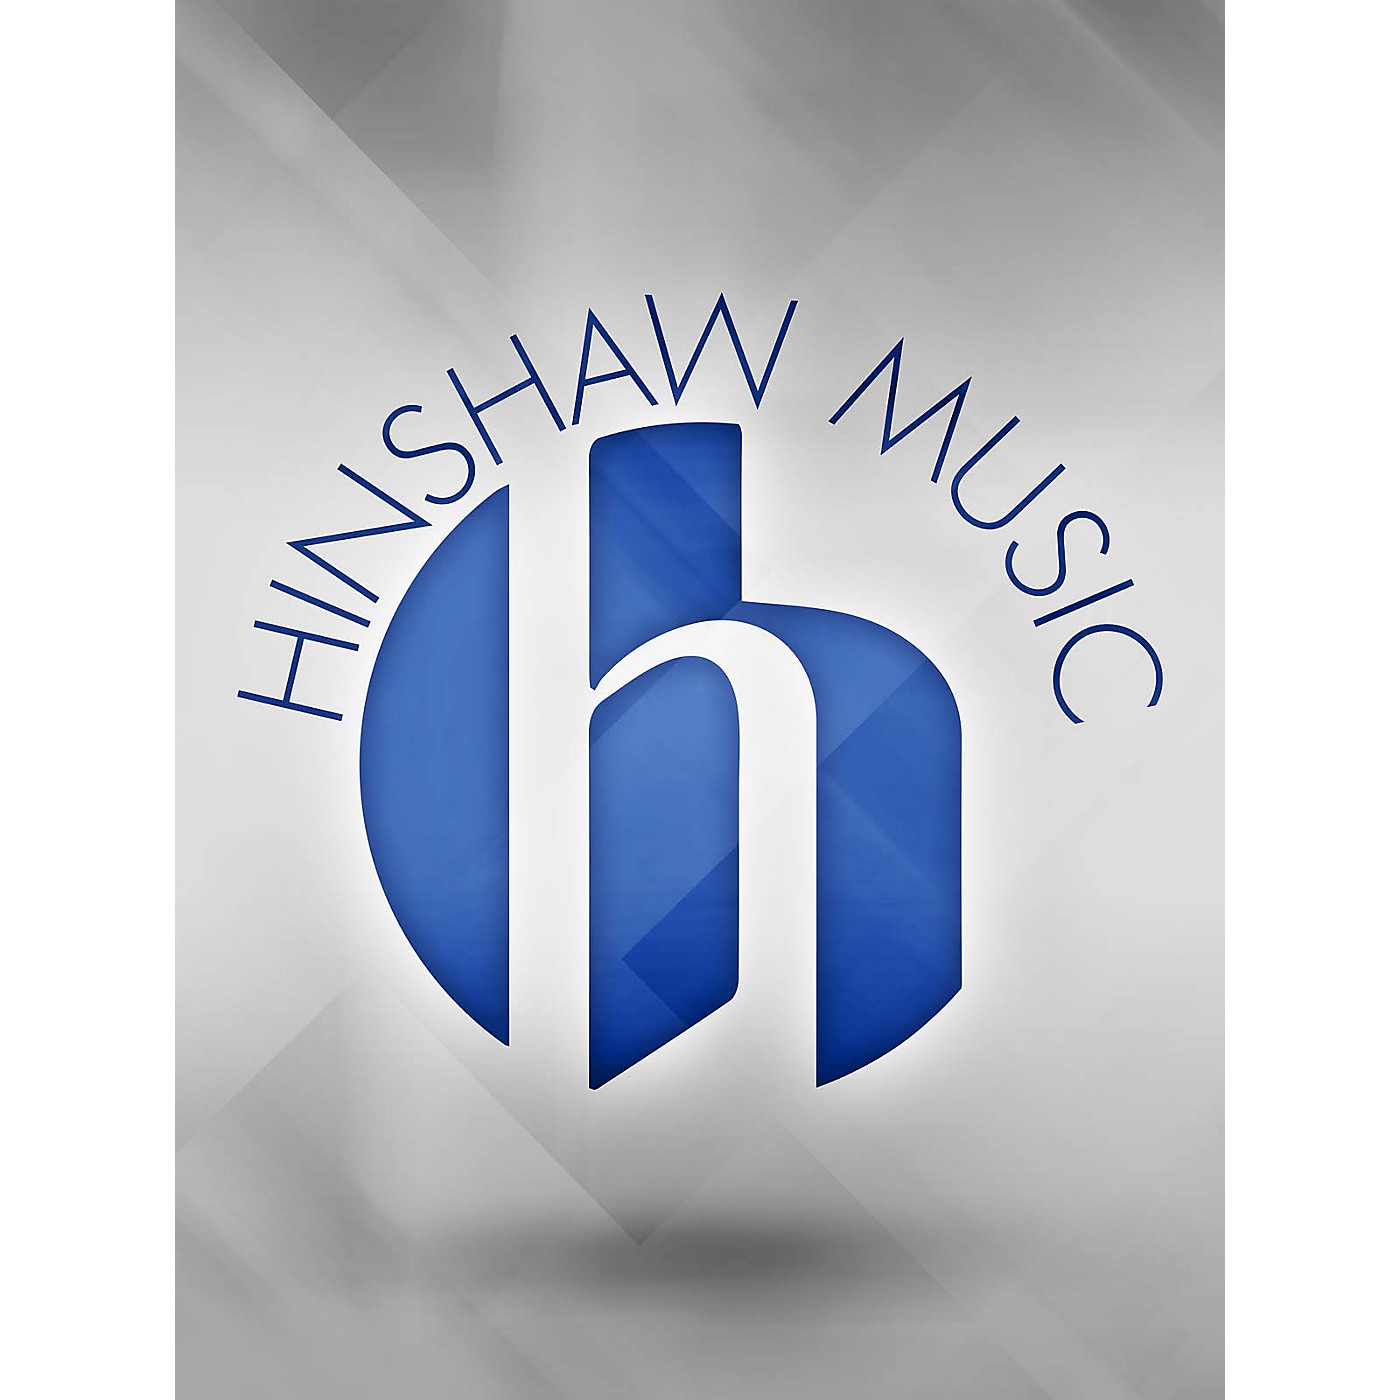 Hinshaw Music What About Us? SATB Composed by Carl Nygard, Jr. thumbnail